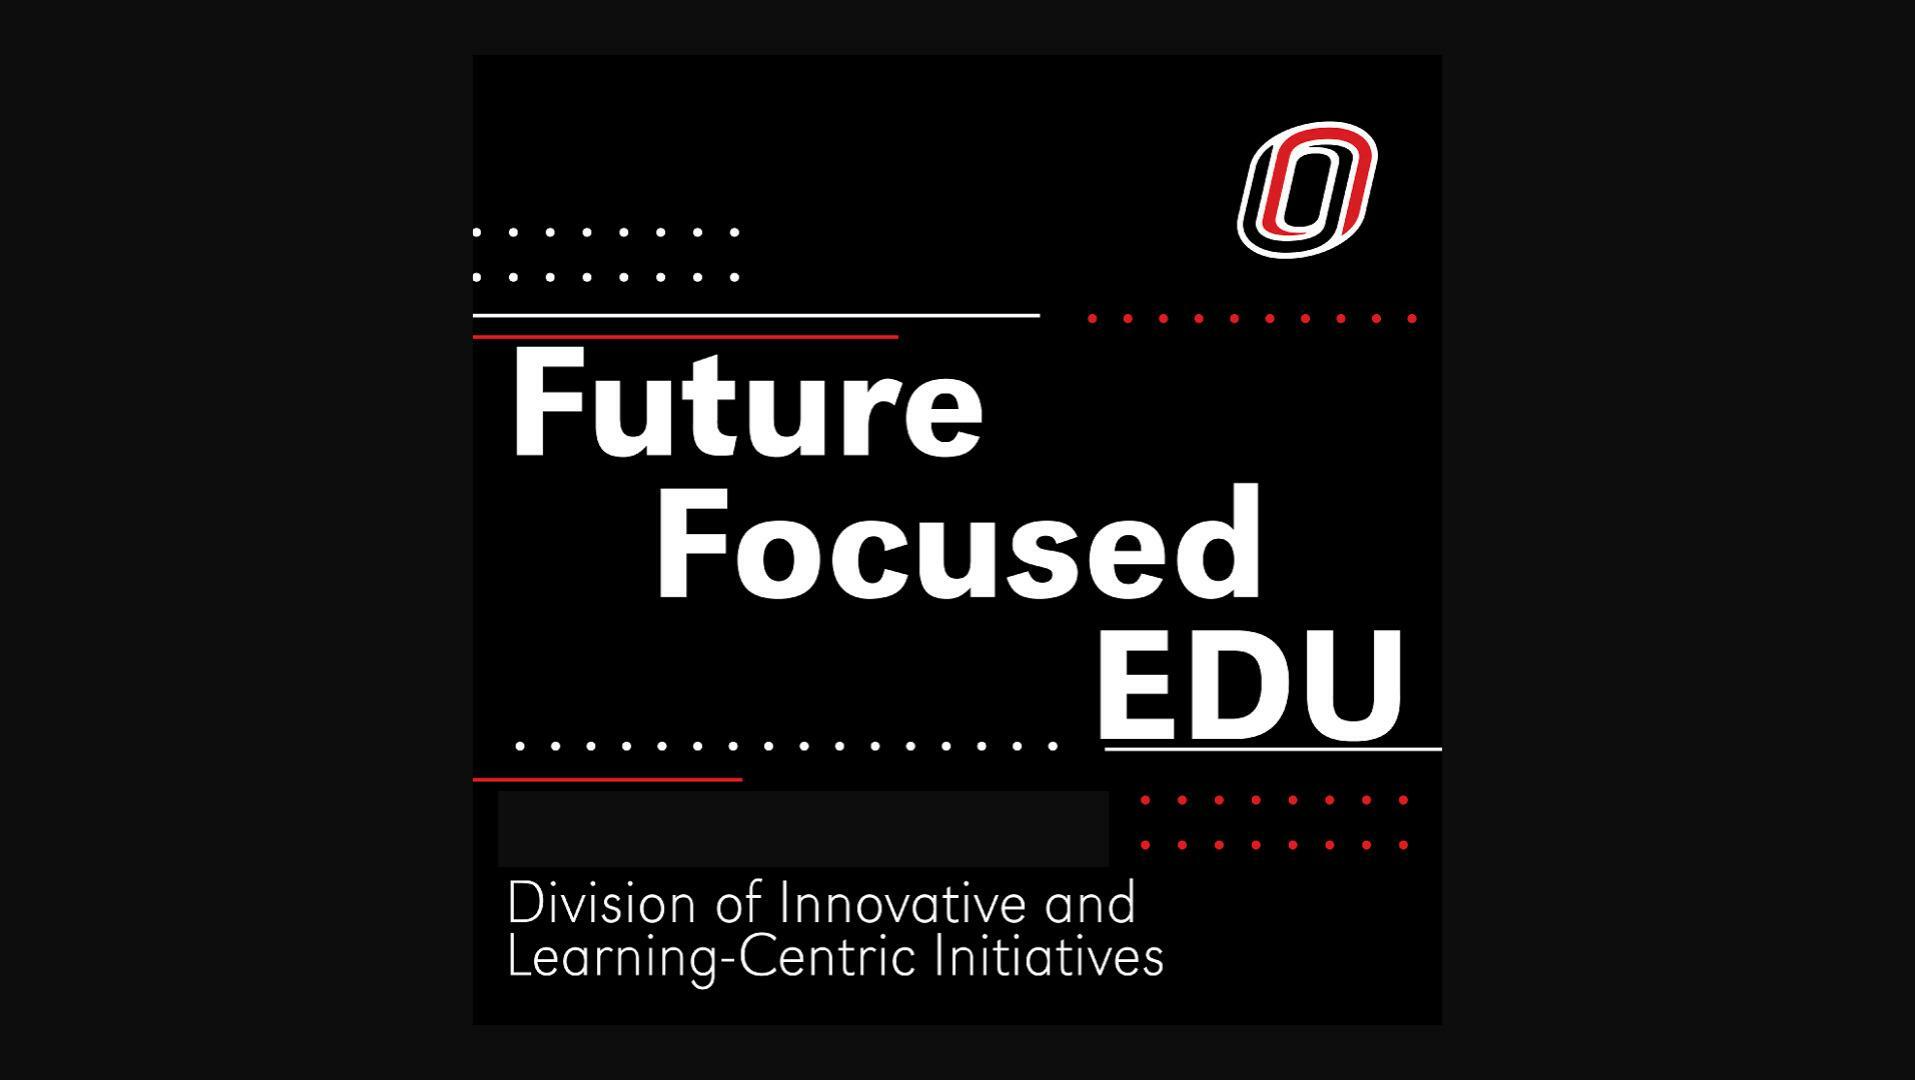 Image with text "future-focused edu"